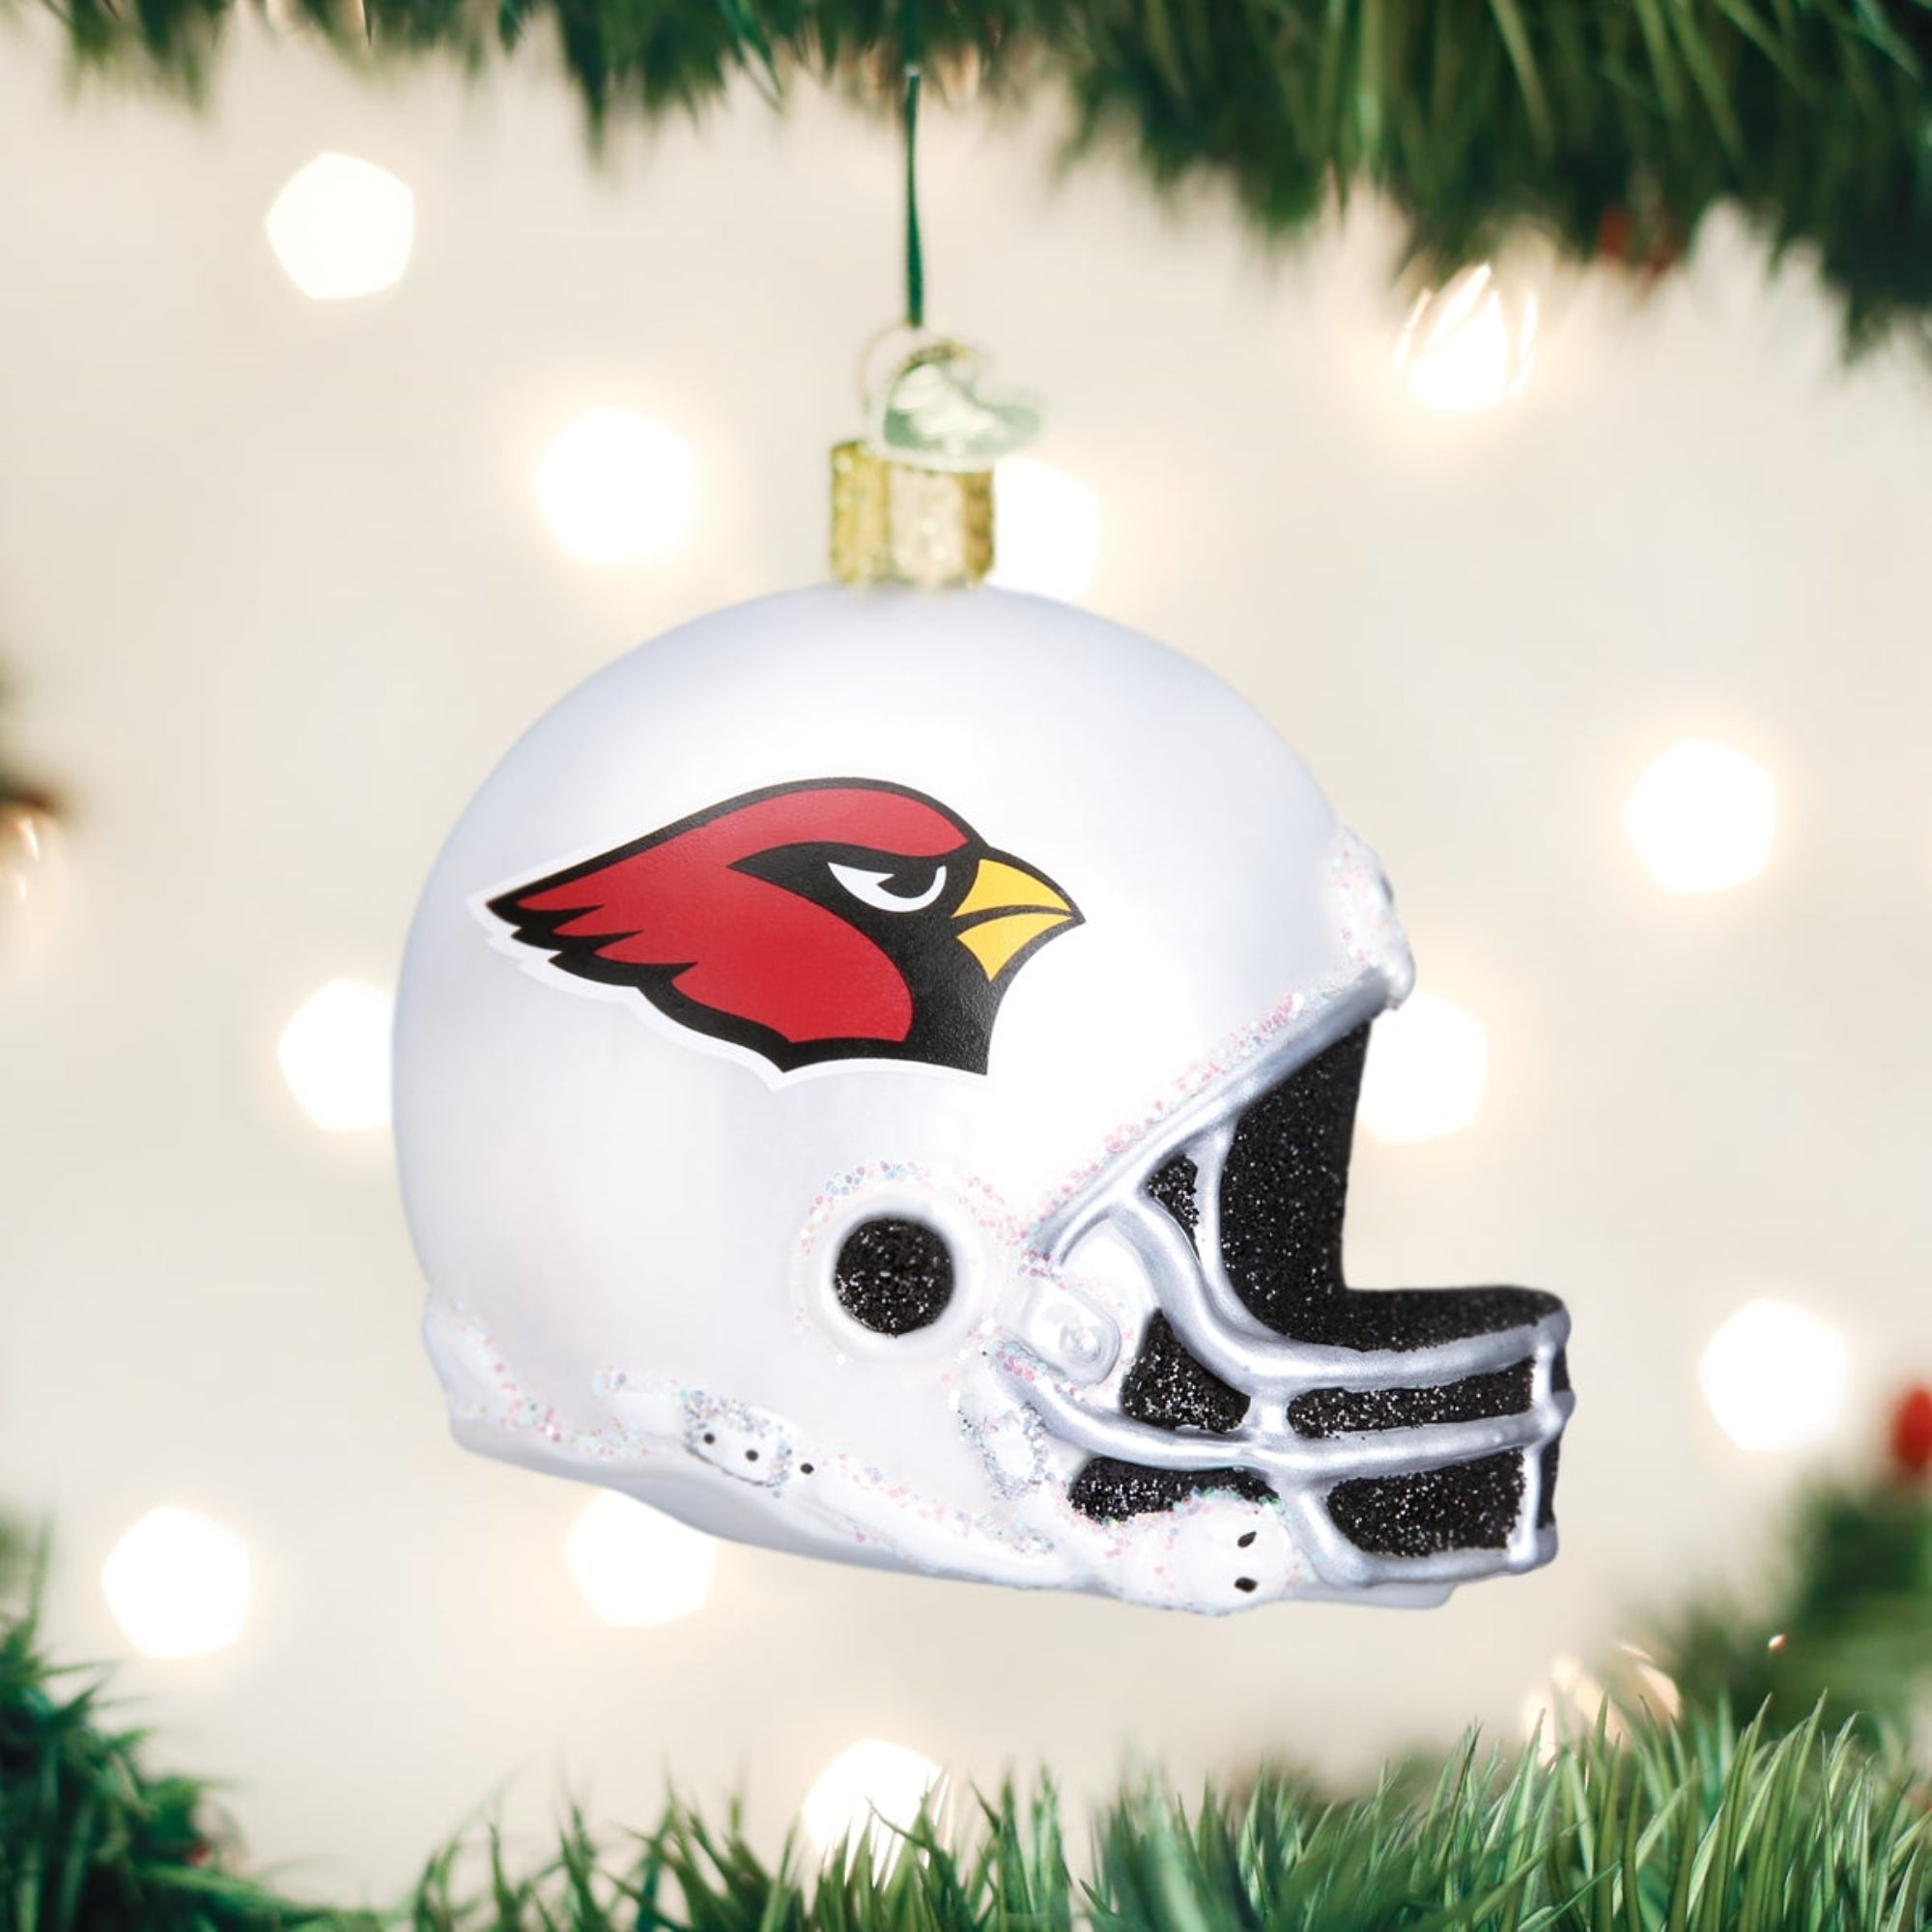 Old World Christmas Arizona Cardinals Helmet Ornament For Christmas Tree